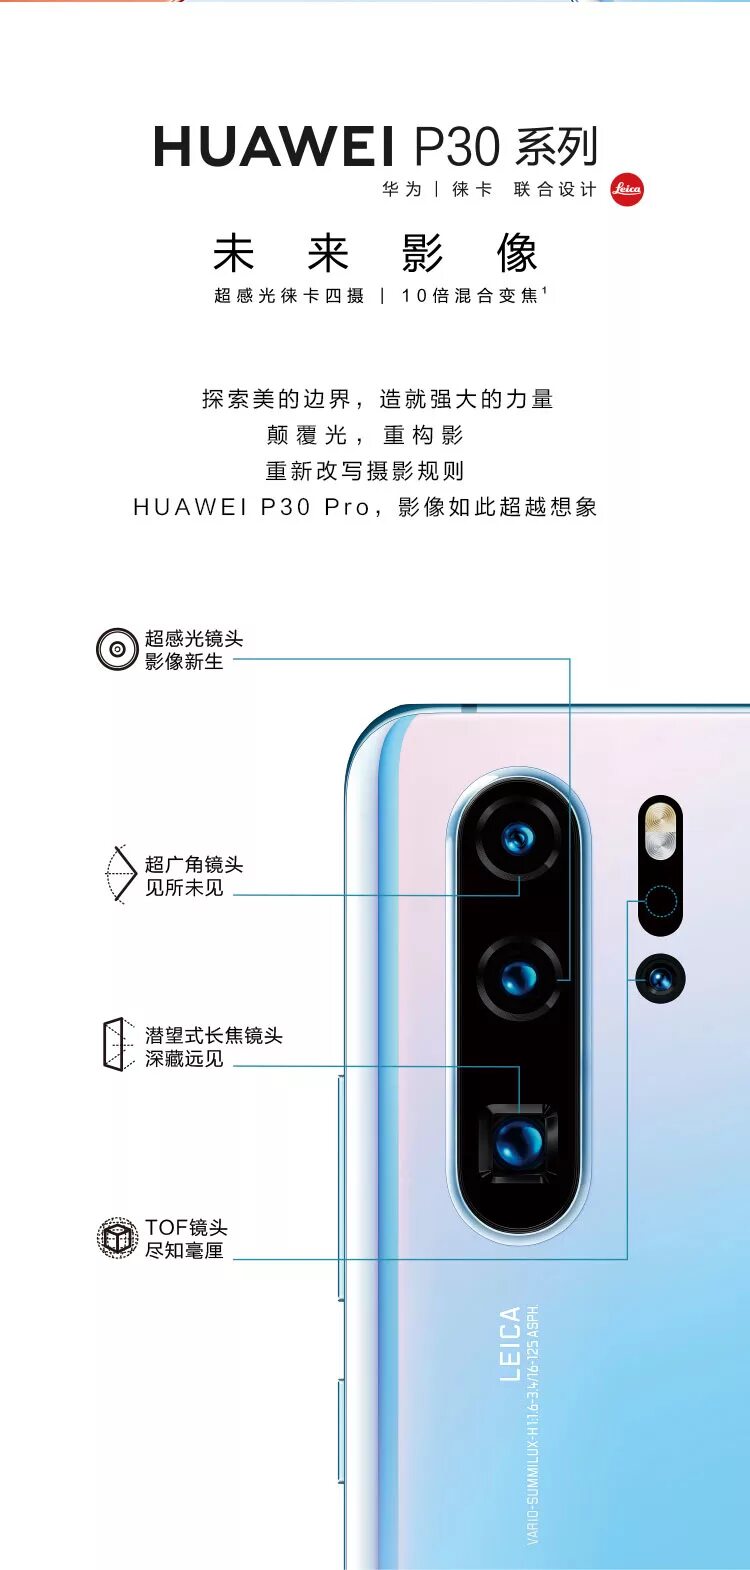 Хуавей п30. Хойвей п 30. Huawei p30 Pro. Huawei p30 Pro камера. P30 lite характеристики